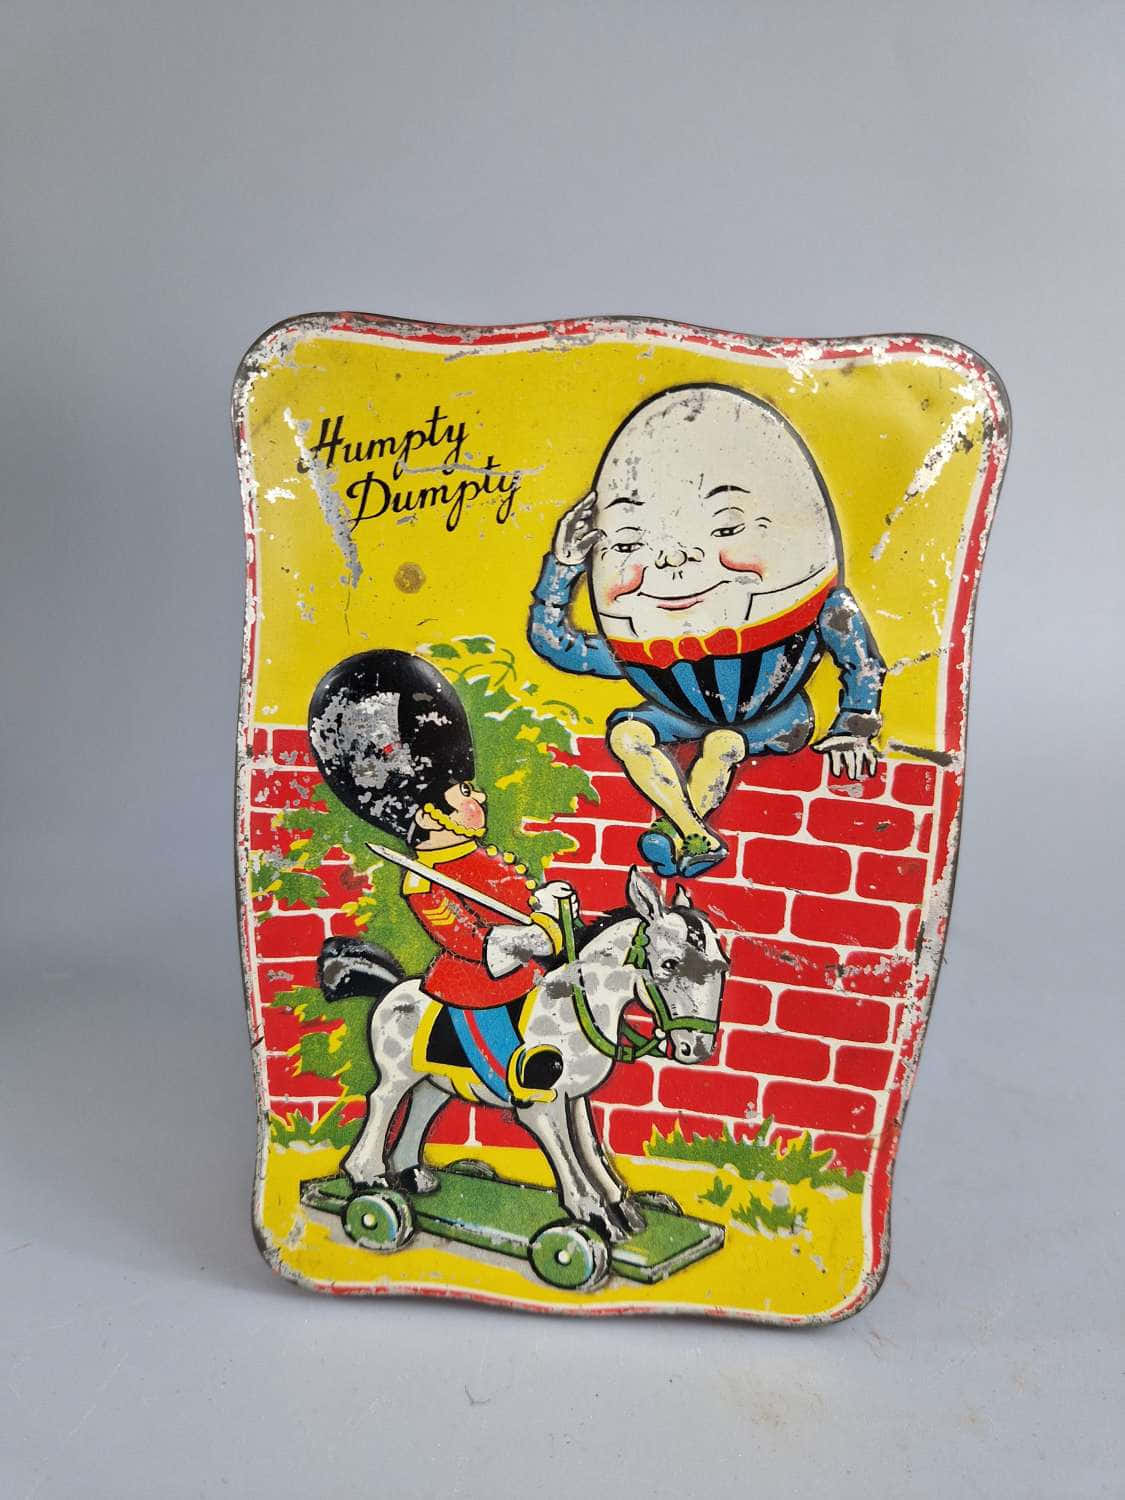 Classic Childhood Tales - Humpty Dumpty Illustration